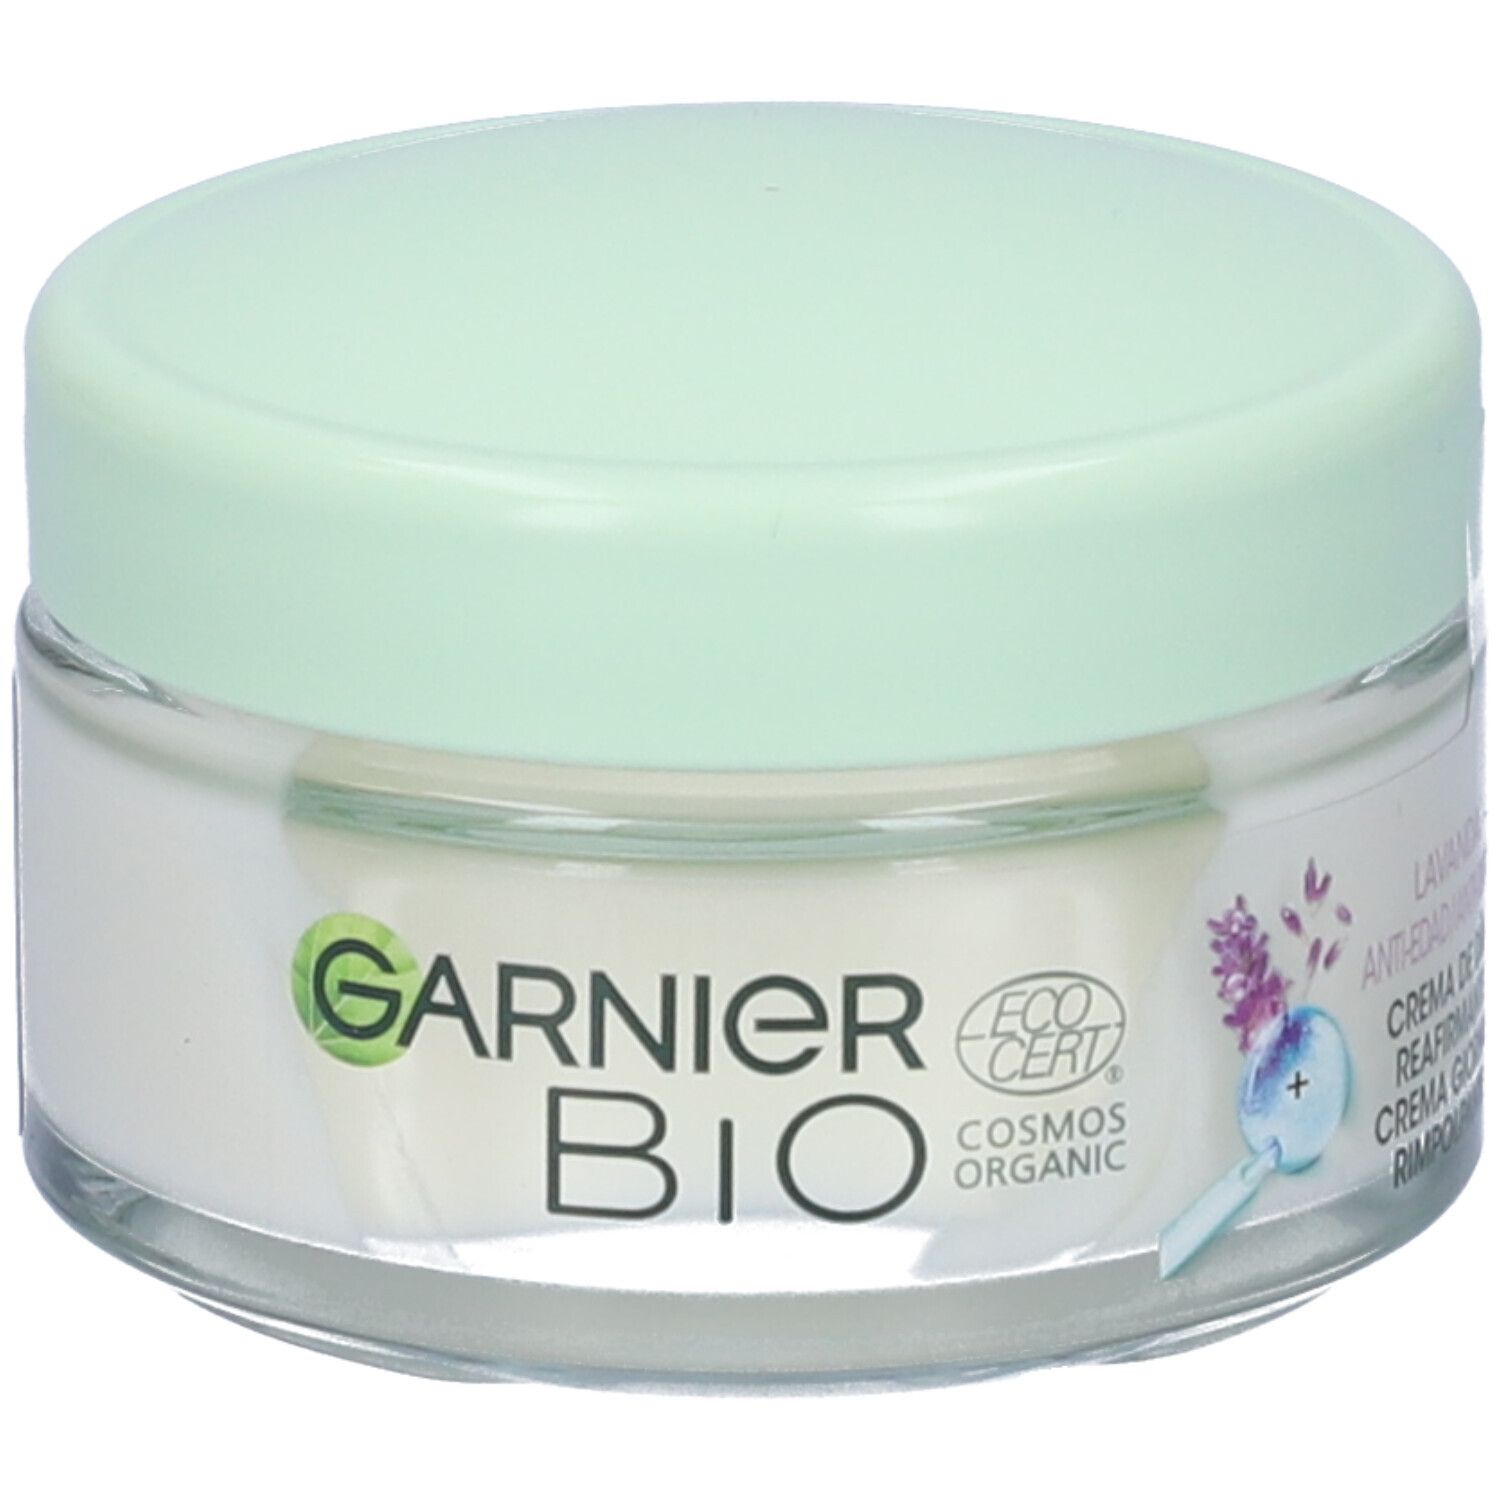 Image of Garnier Bio Crema Viso Anti-rughe Lavanda Rigenerante, Crema Viso Anti-età Anti-rughe, Formula alla Lavanda, 50 ml